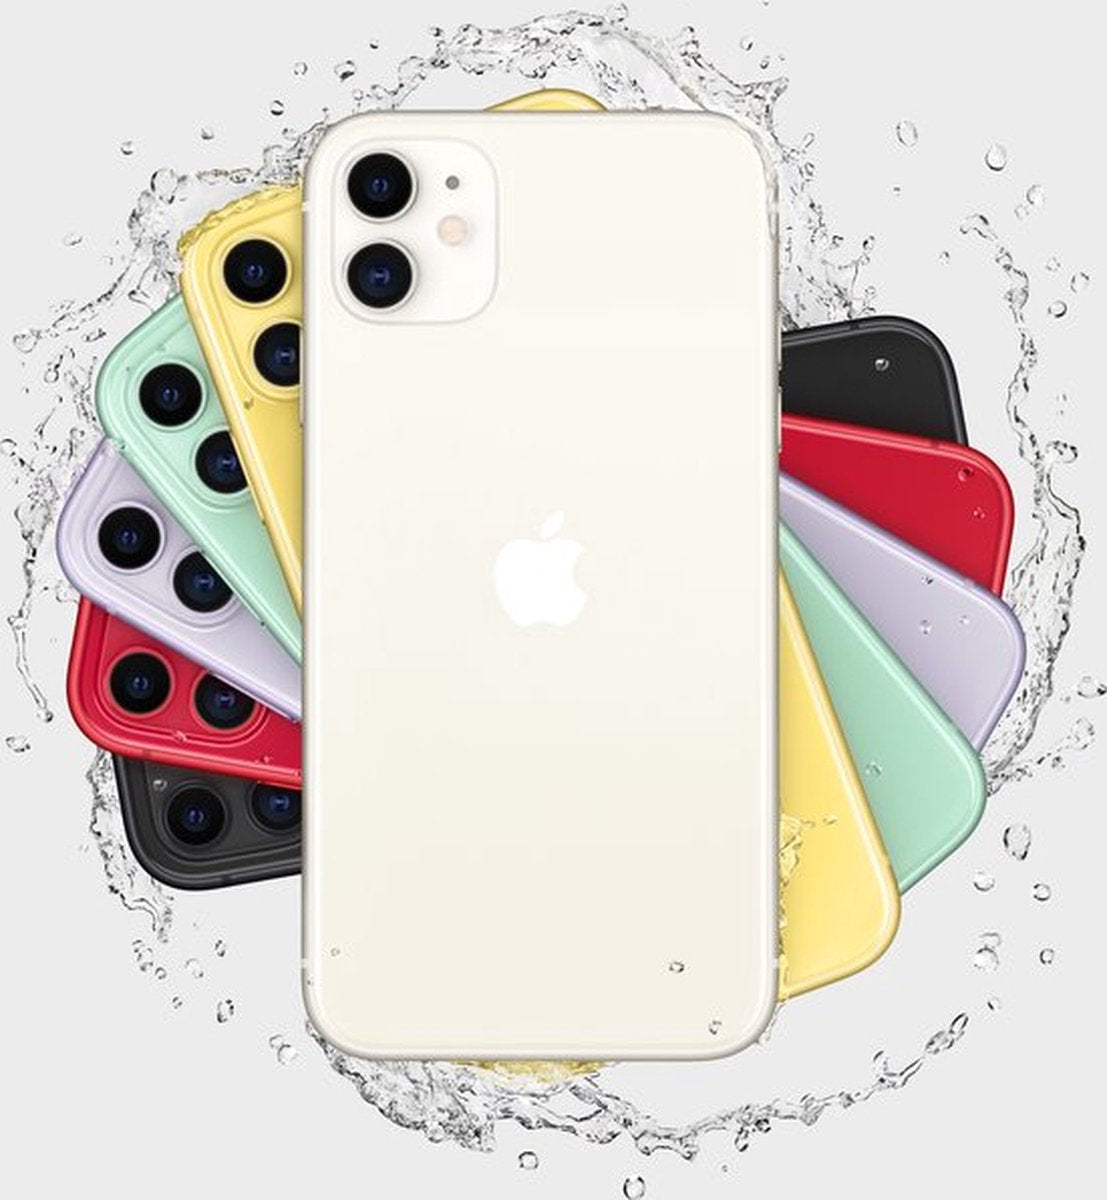 Apple iPhone 11 - 64GB - Wit